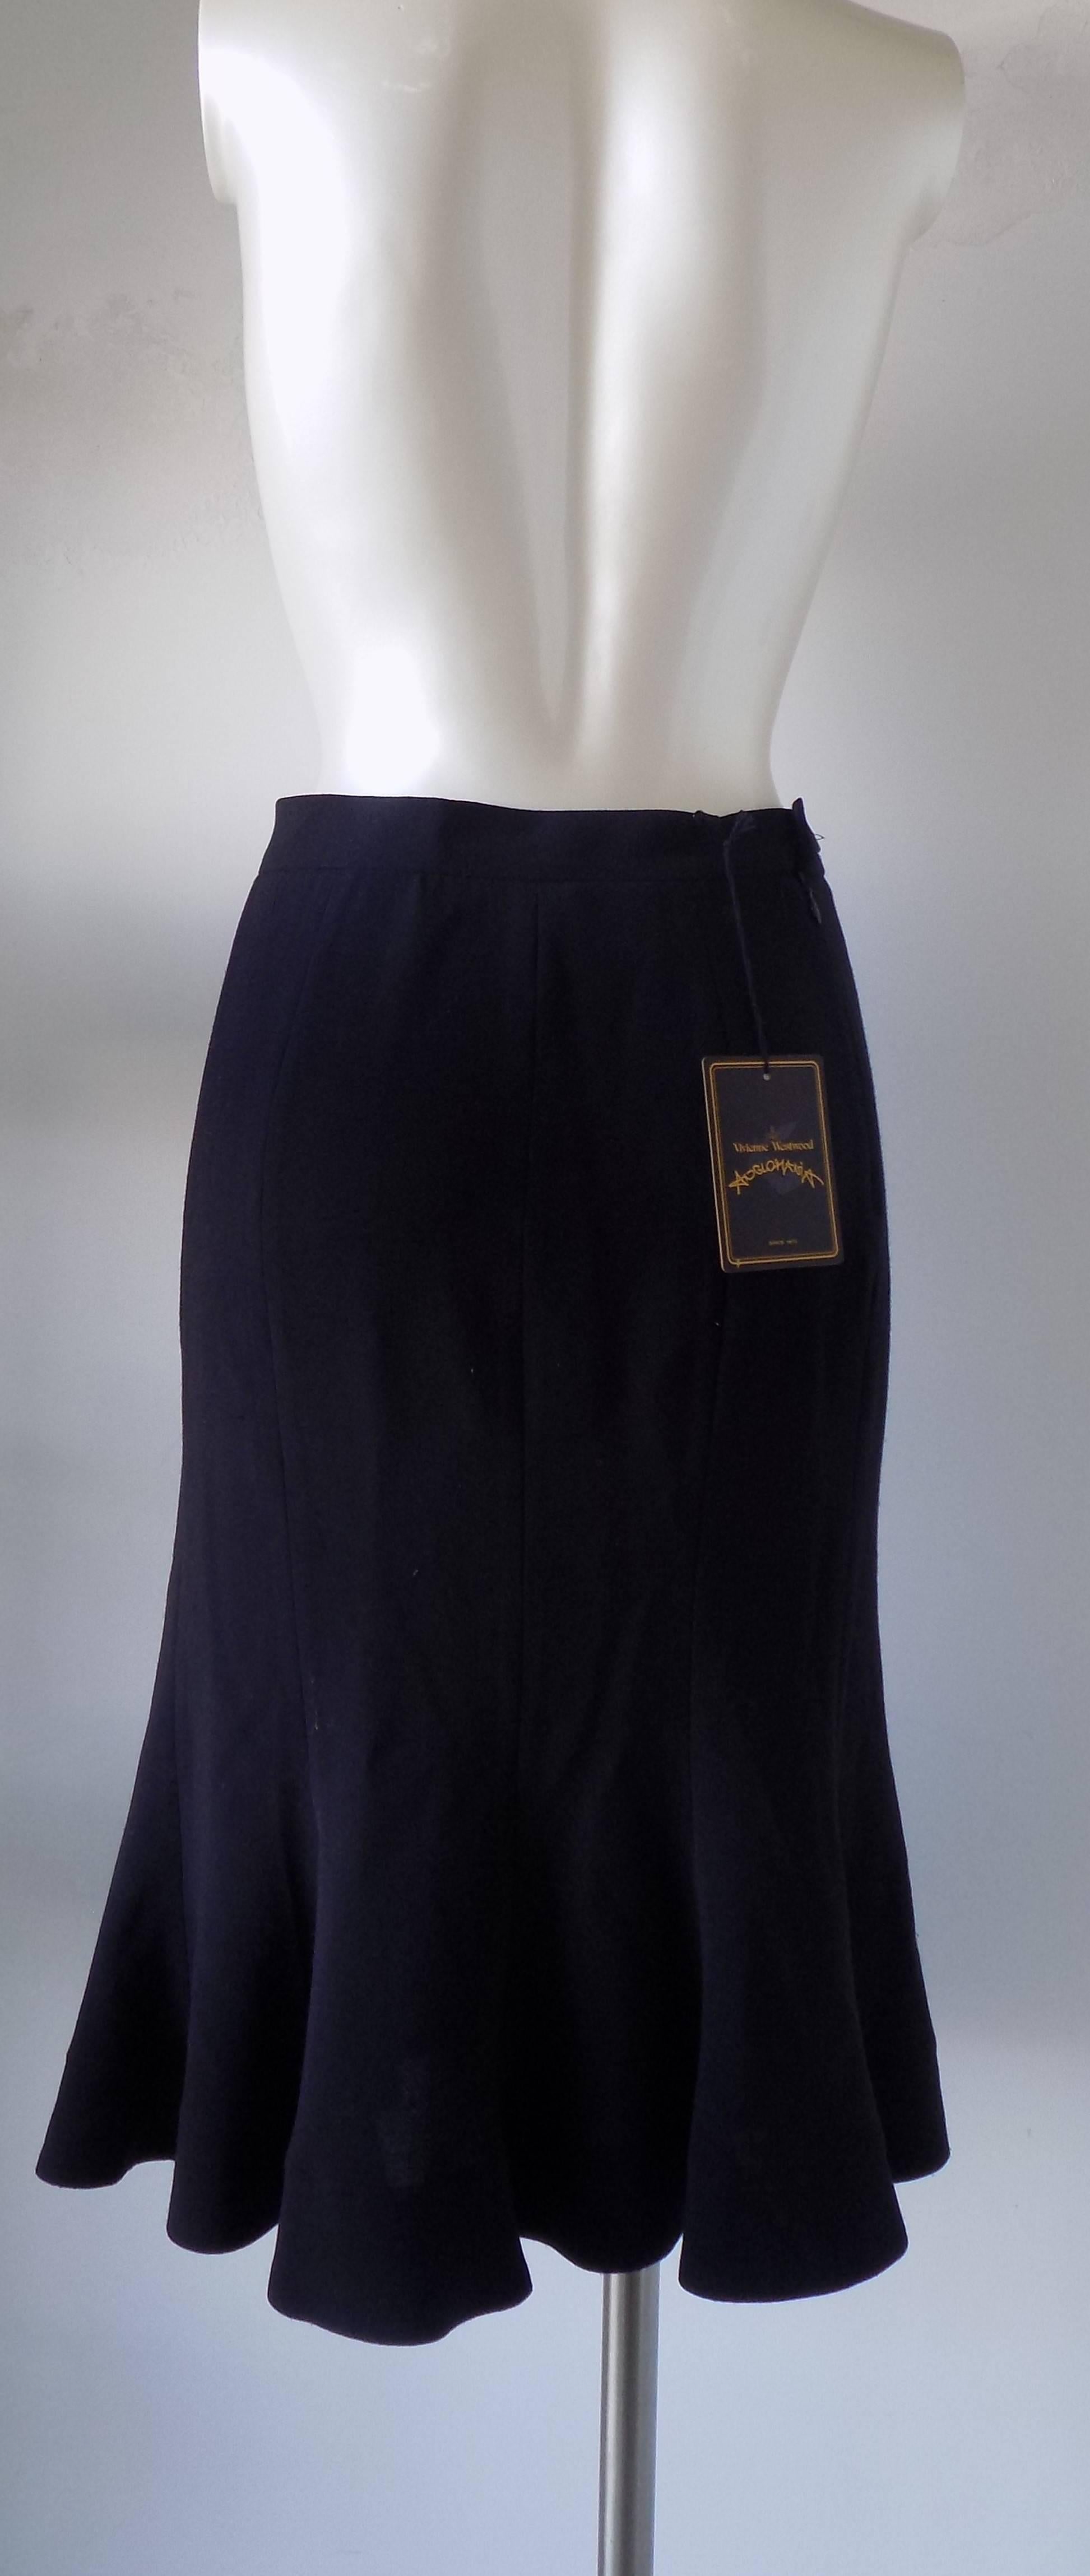 Black 1990s Vivienne Westwood Anglomania black skirt NWOT